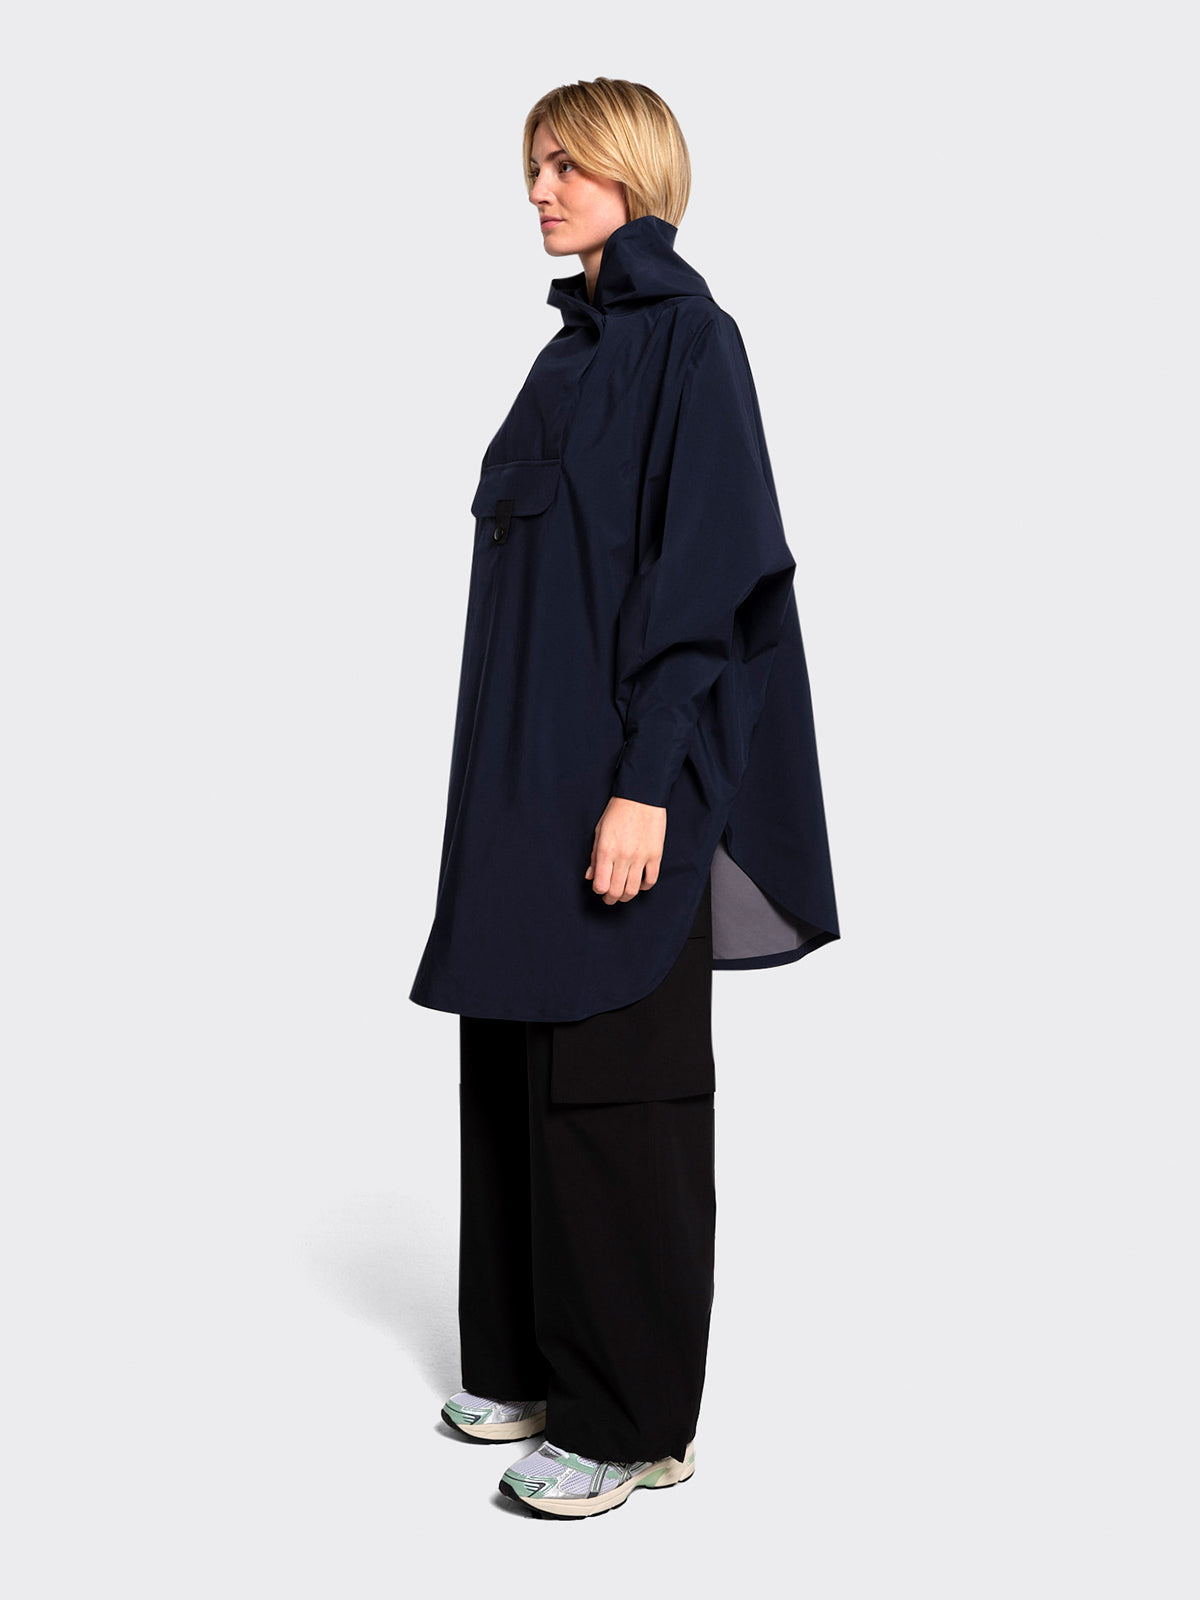 Woman dressed in Bergen poncho by Blæst in Dark Navy